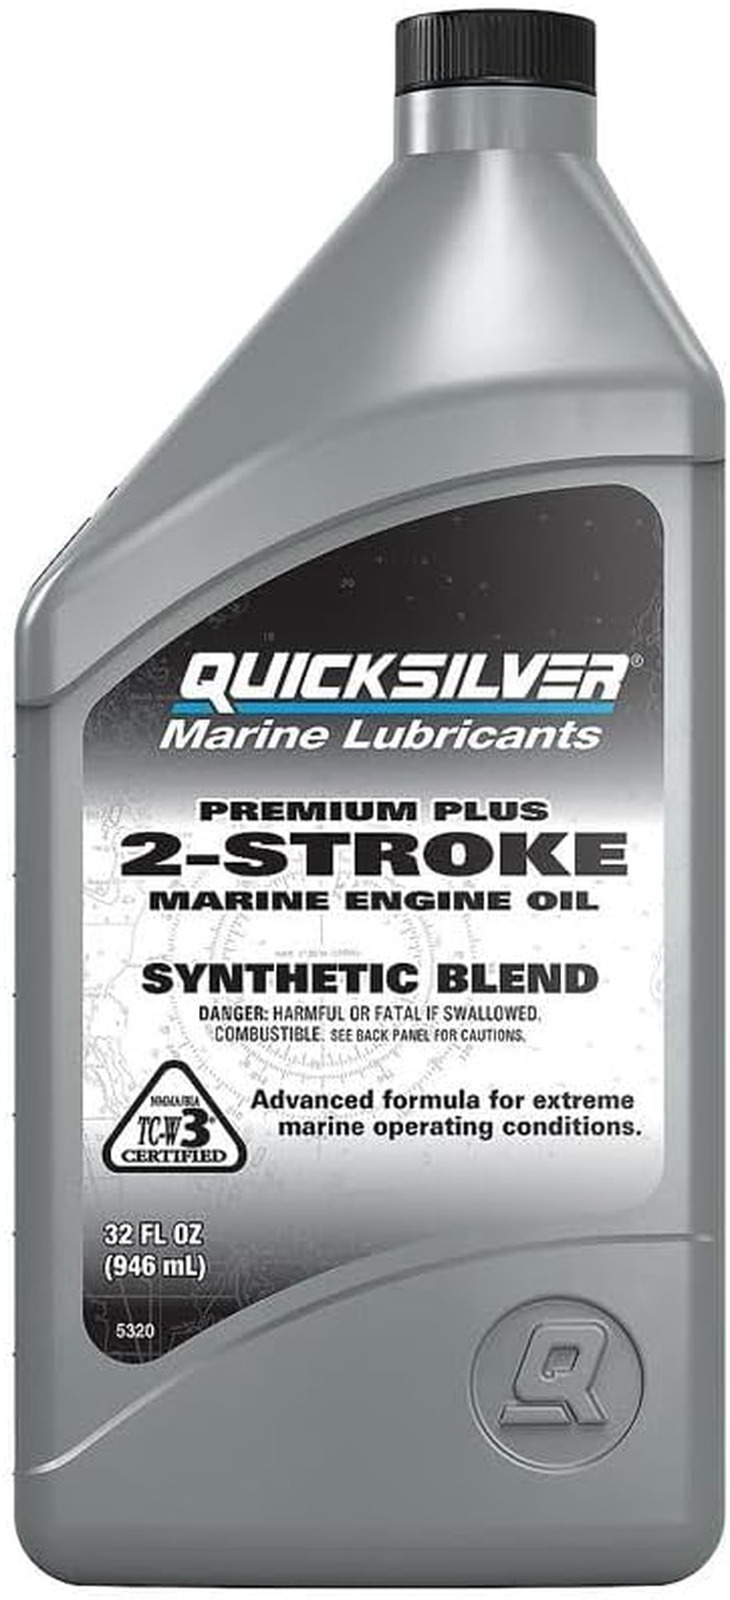 858026Q01 Premium plus 2-Stroke Marine Engine Oil Synthetic Blend, 32 Oz.